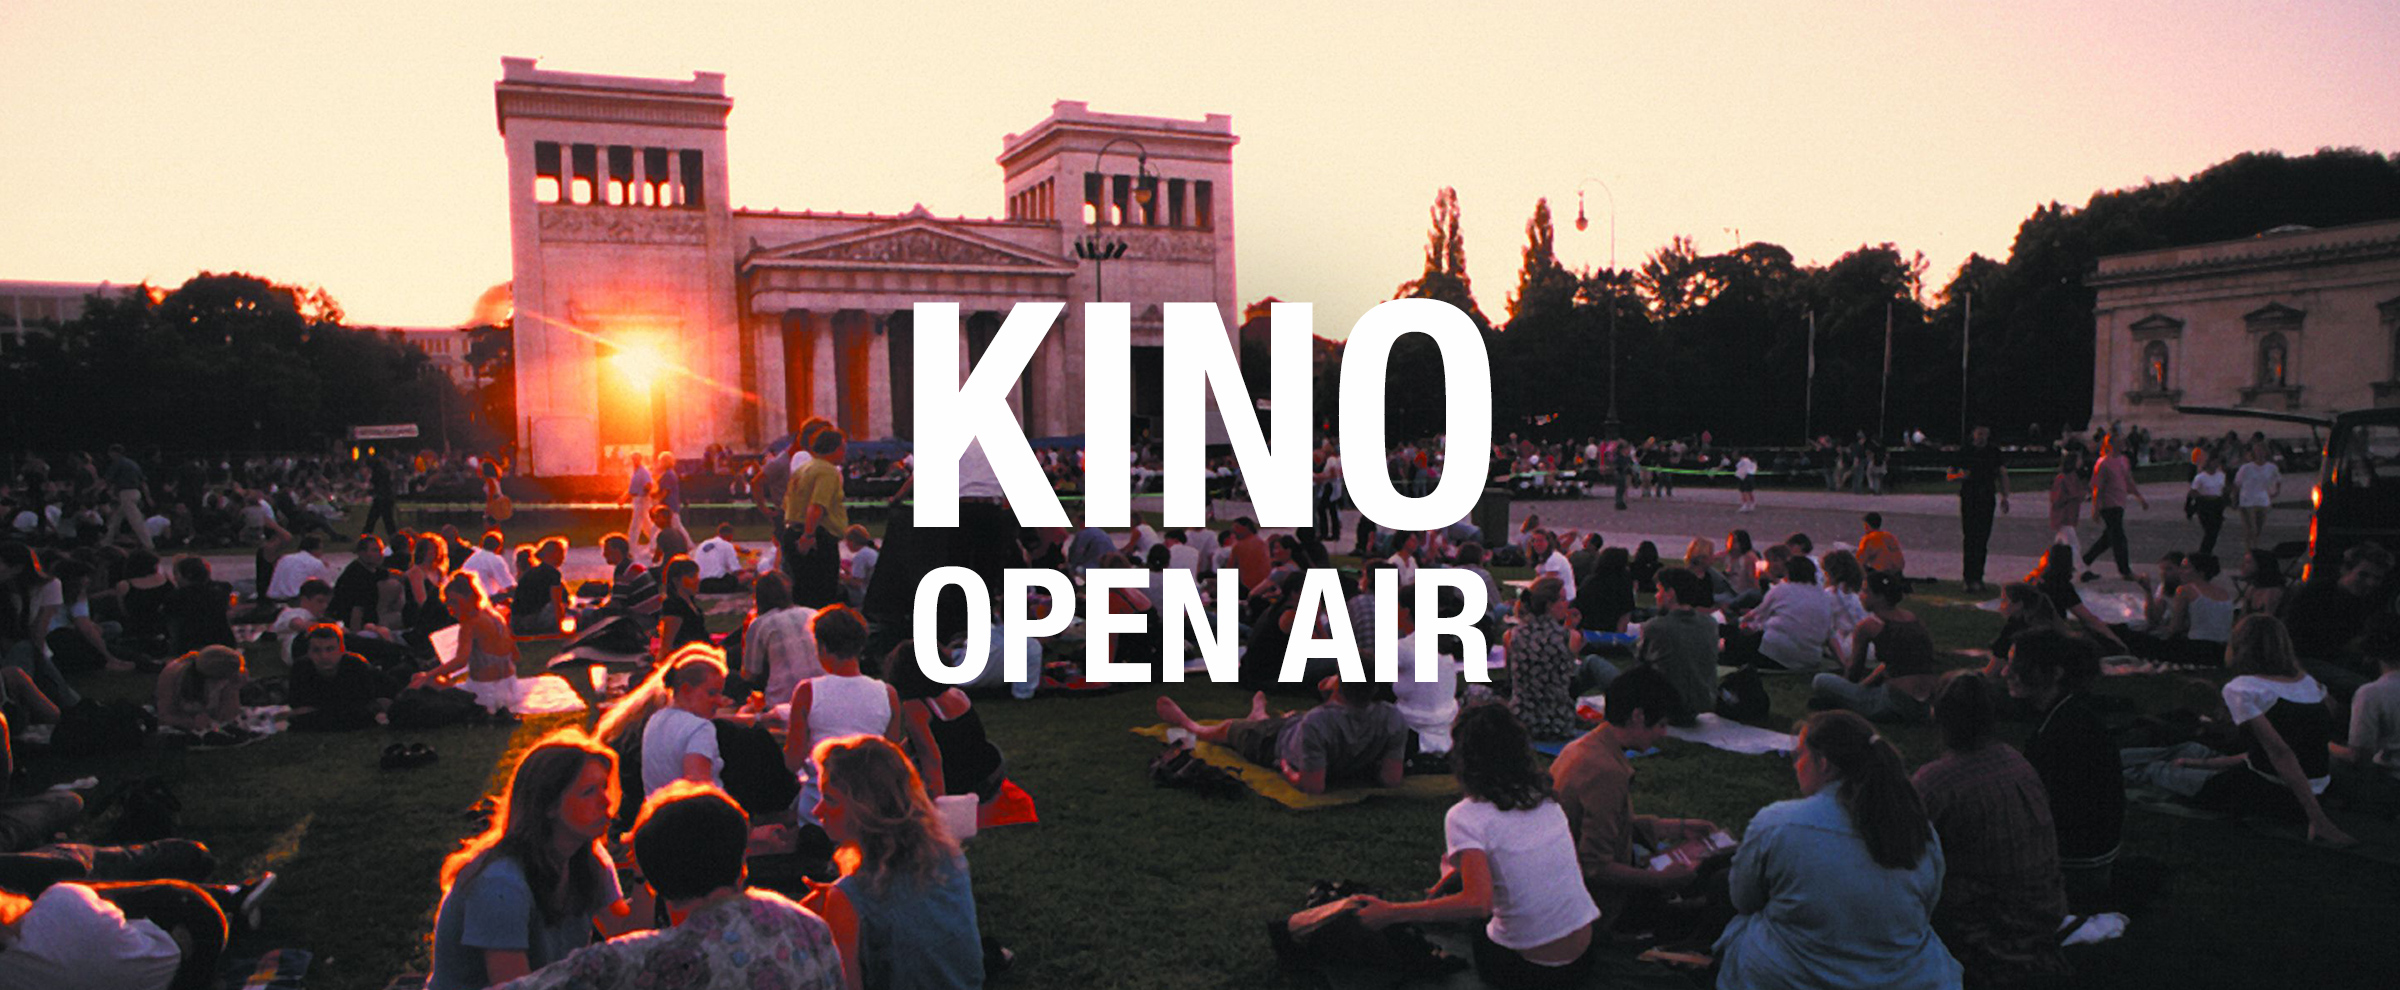 Kino Open Air Website